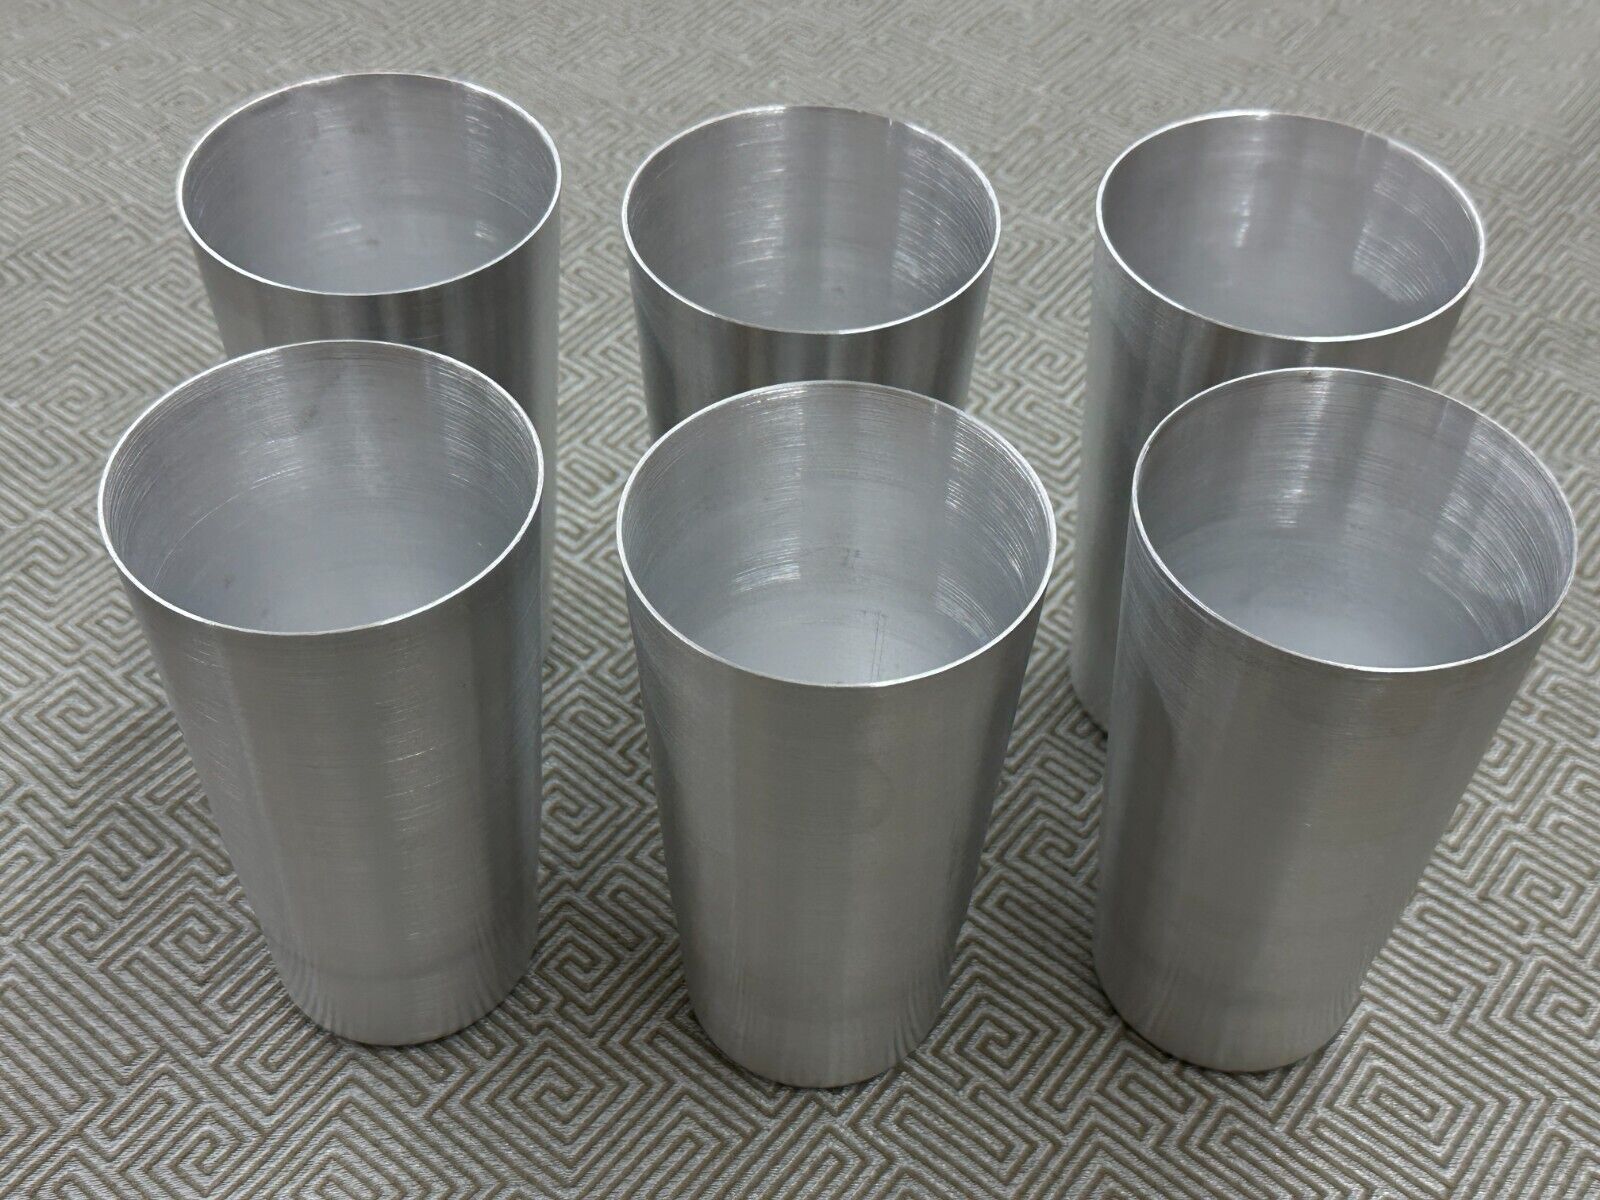 NEW 6 Pcs Aluminum Tumblers Drinking Glasses Vintage Retro Metal Cup 12 fl ounce